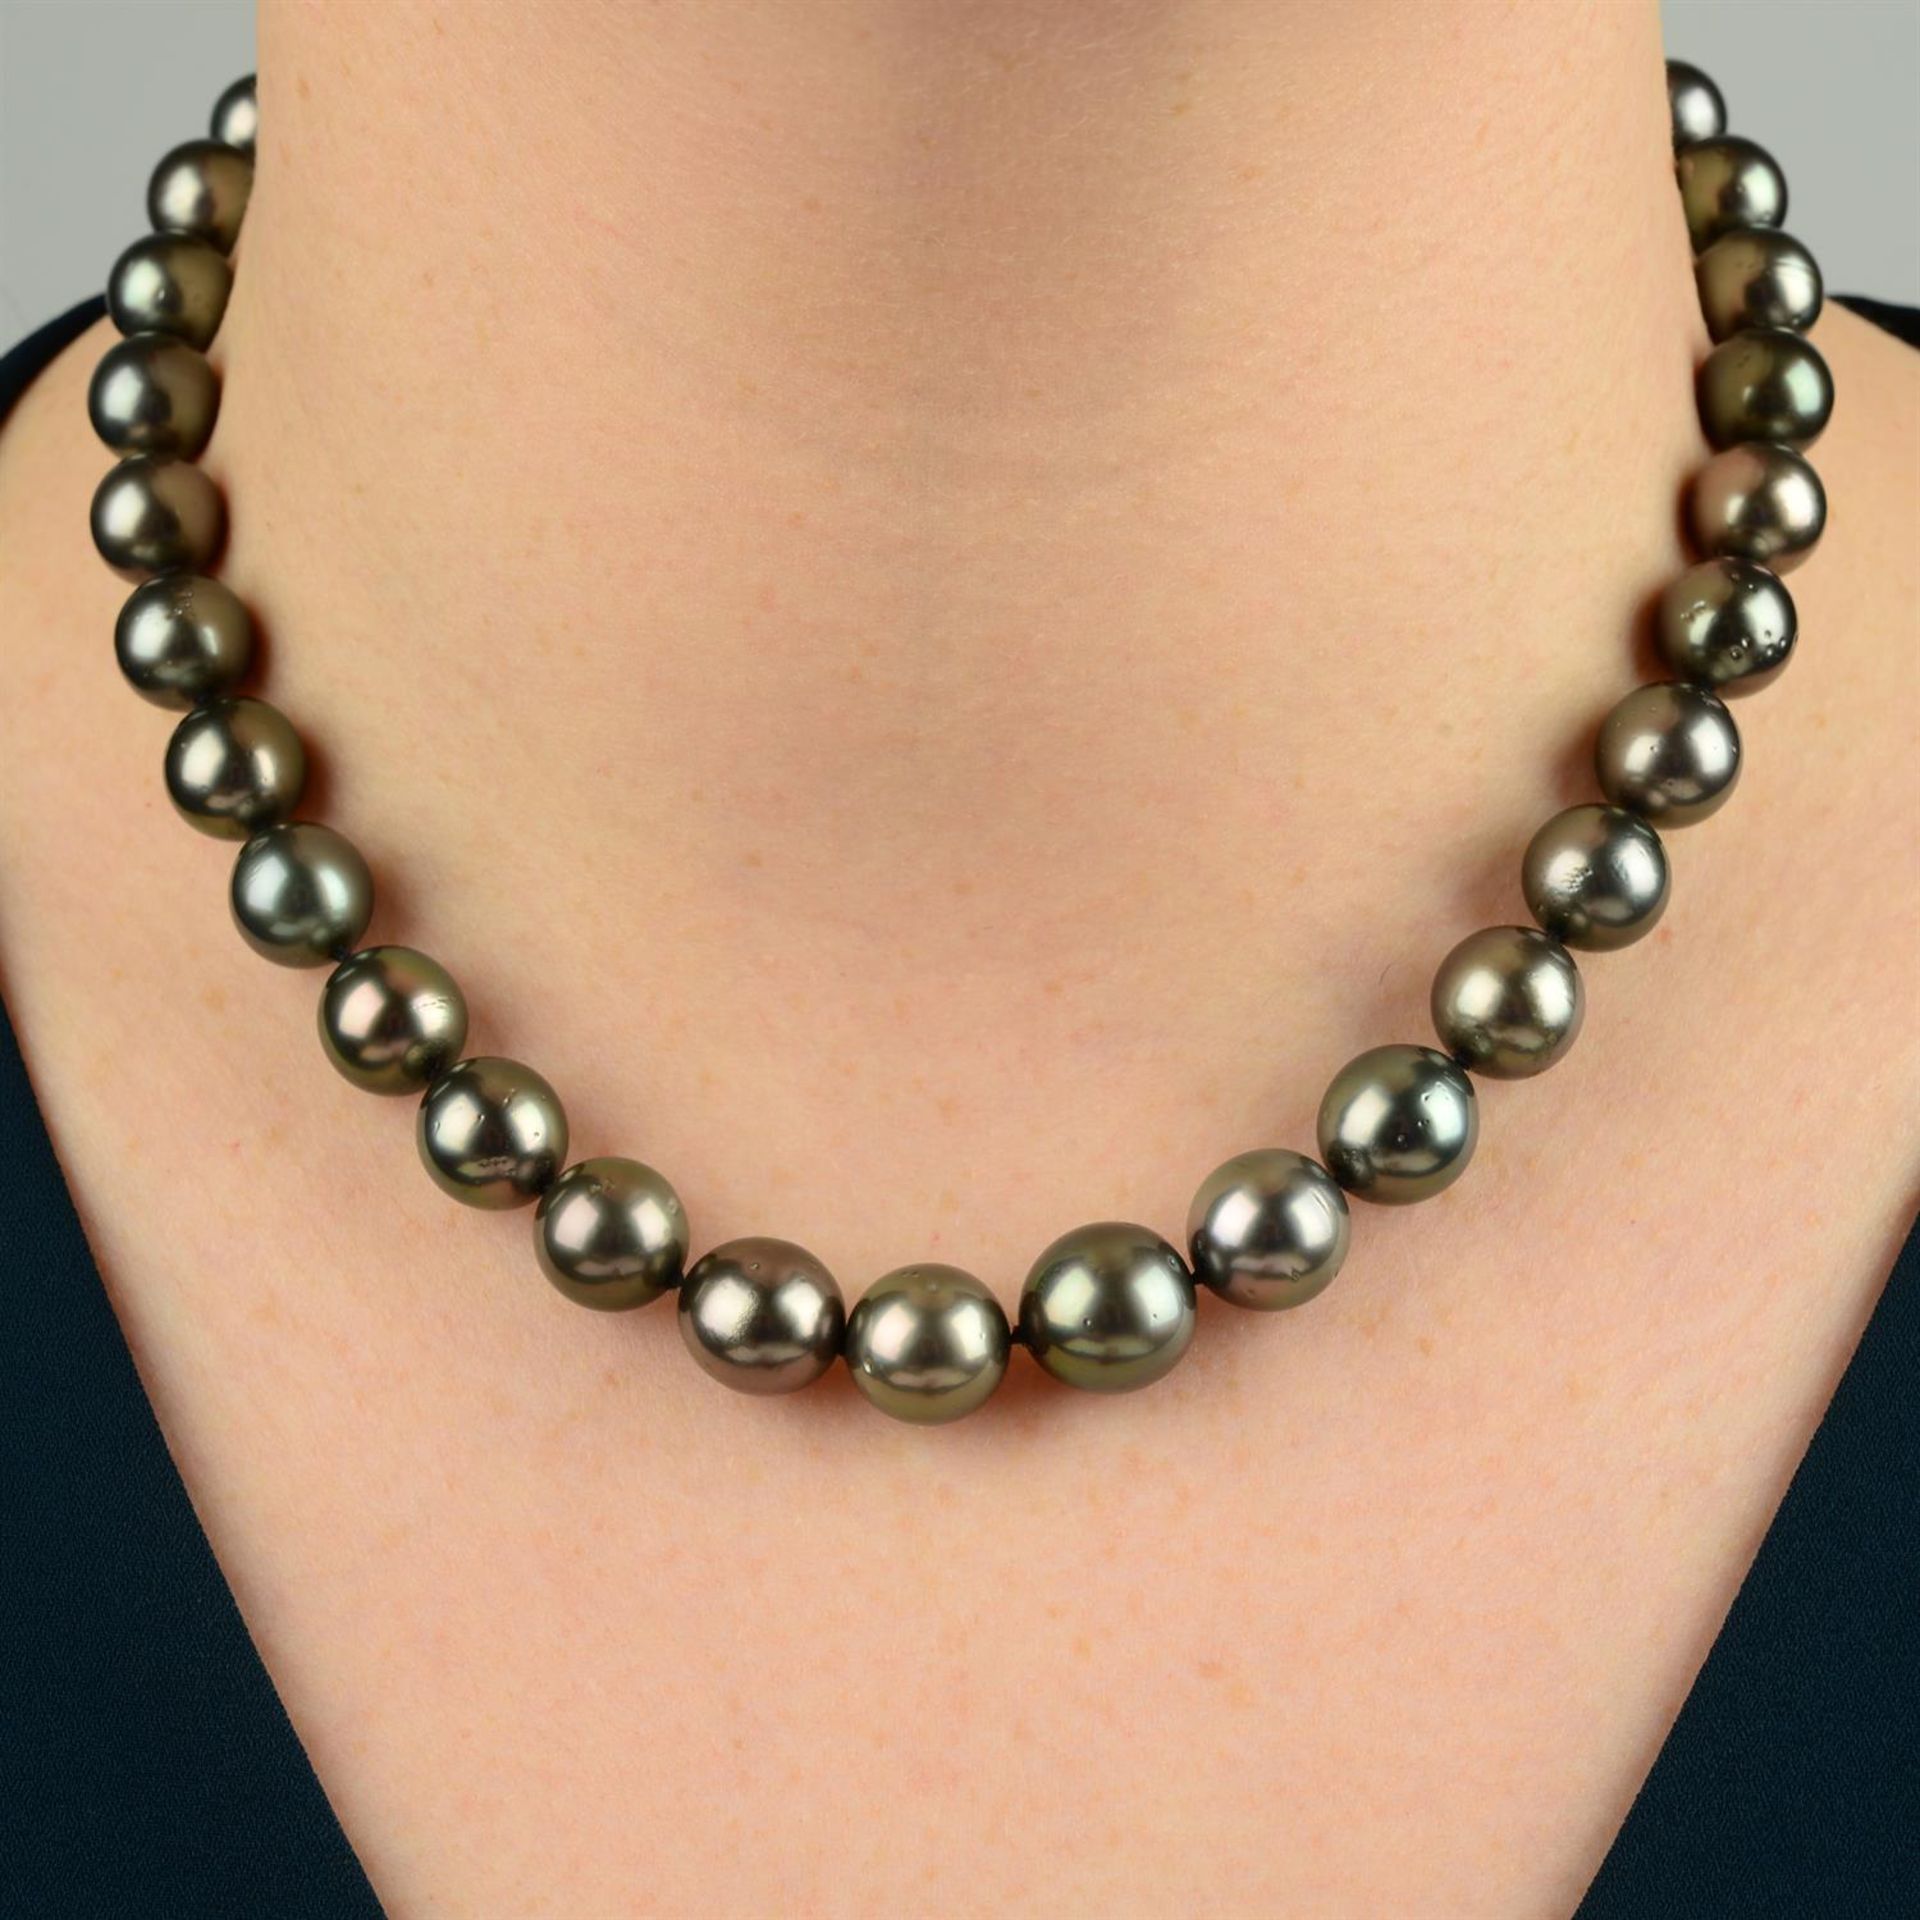 A graduated cultured pearl necklace, with a brilliant-cut diamond clasp.